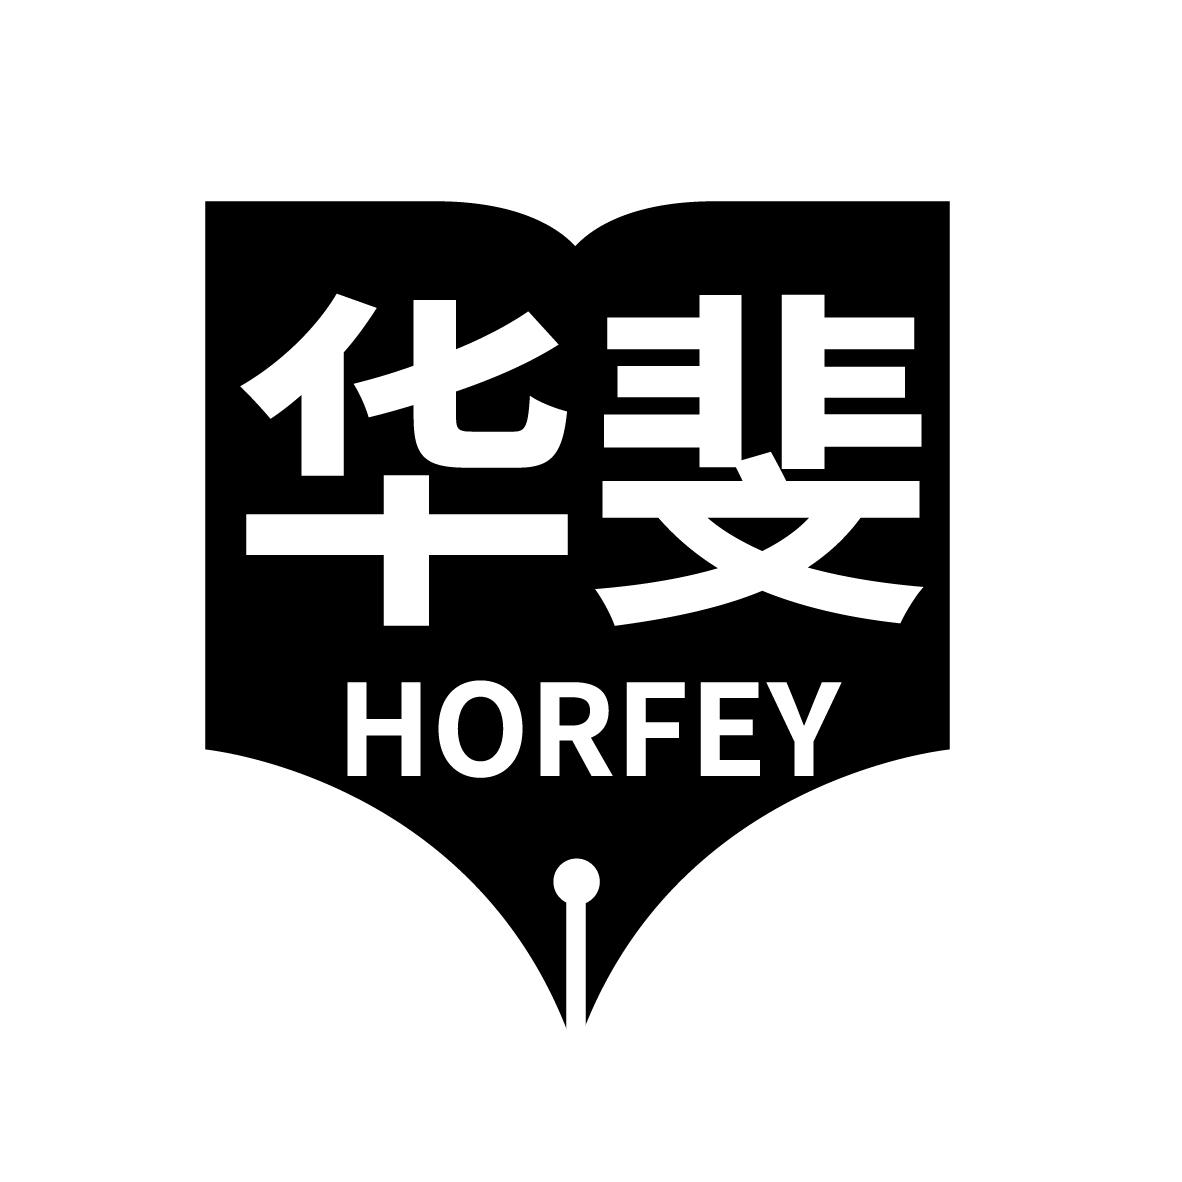   HORFEY